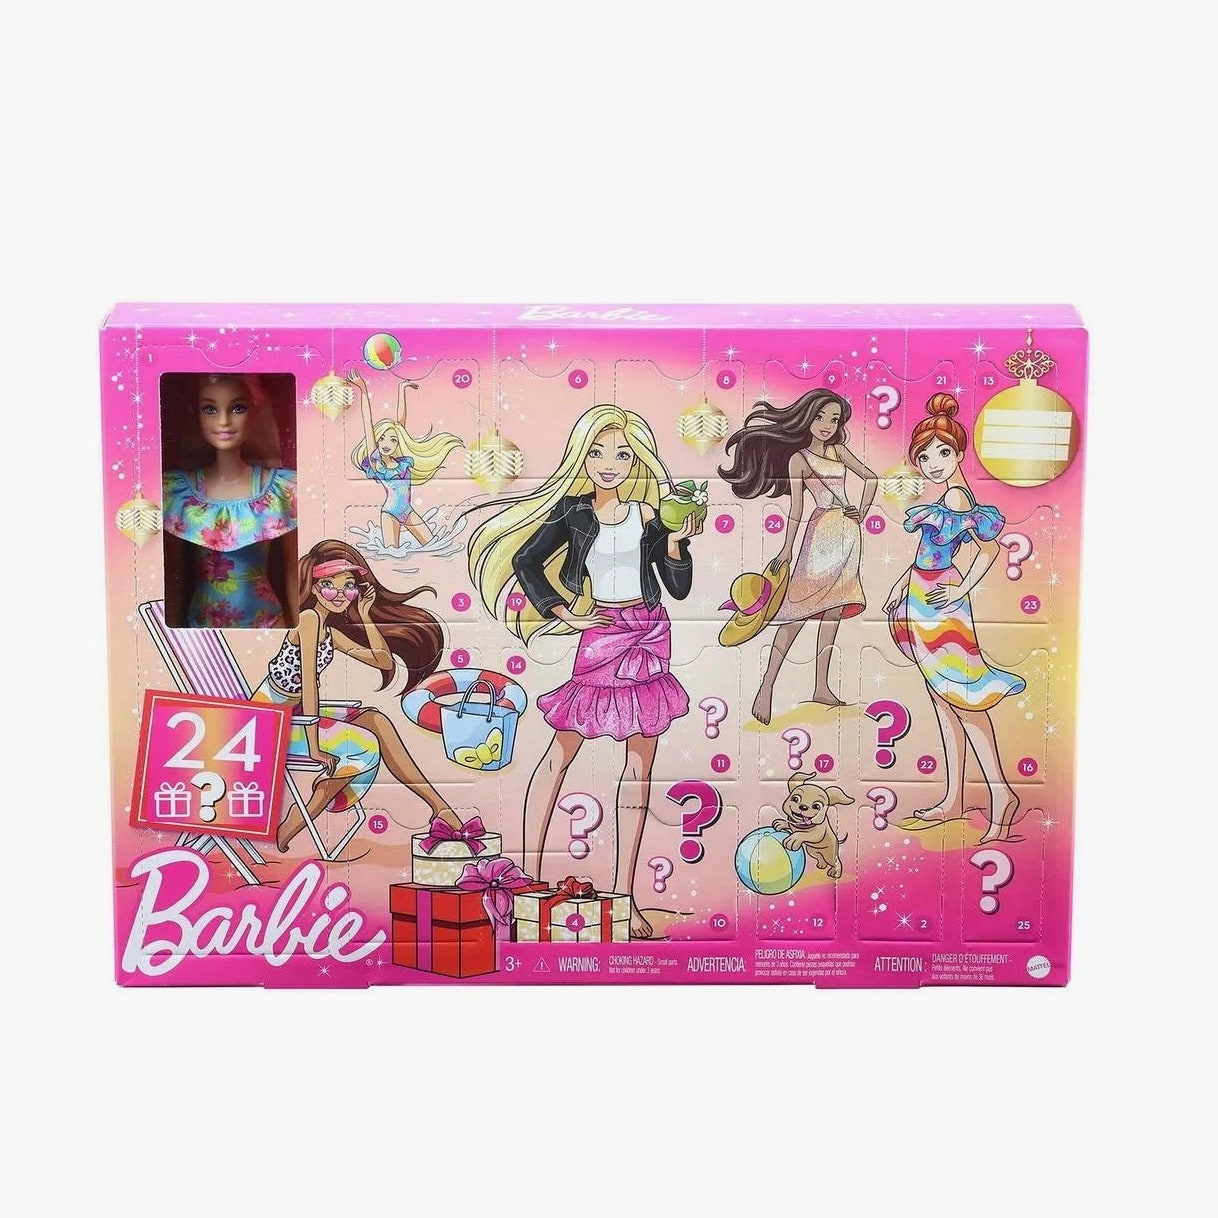 Адвенткалендарь Barbie 2999 рублей sbermegamarket.ru